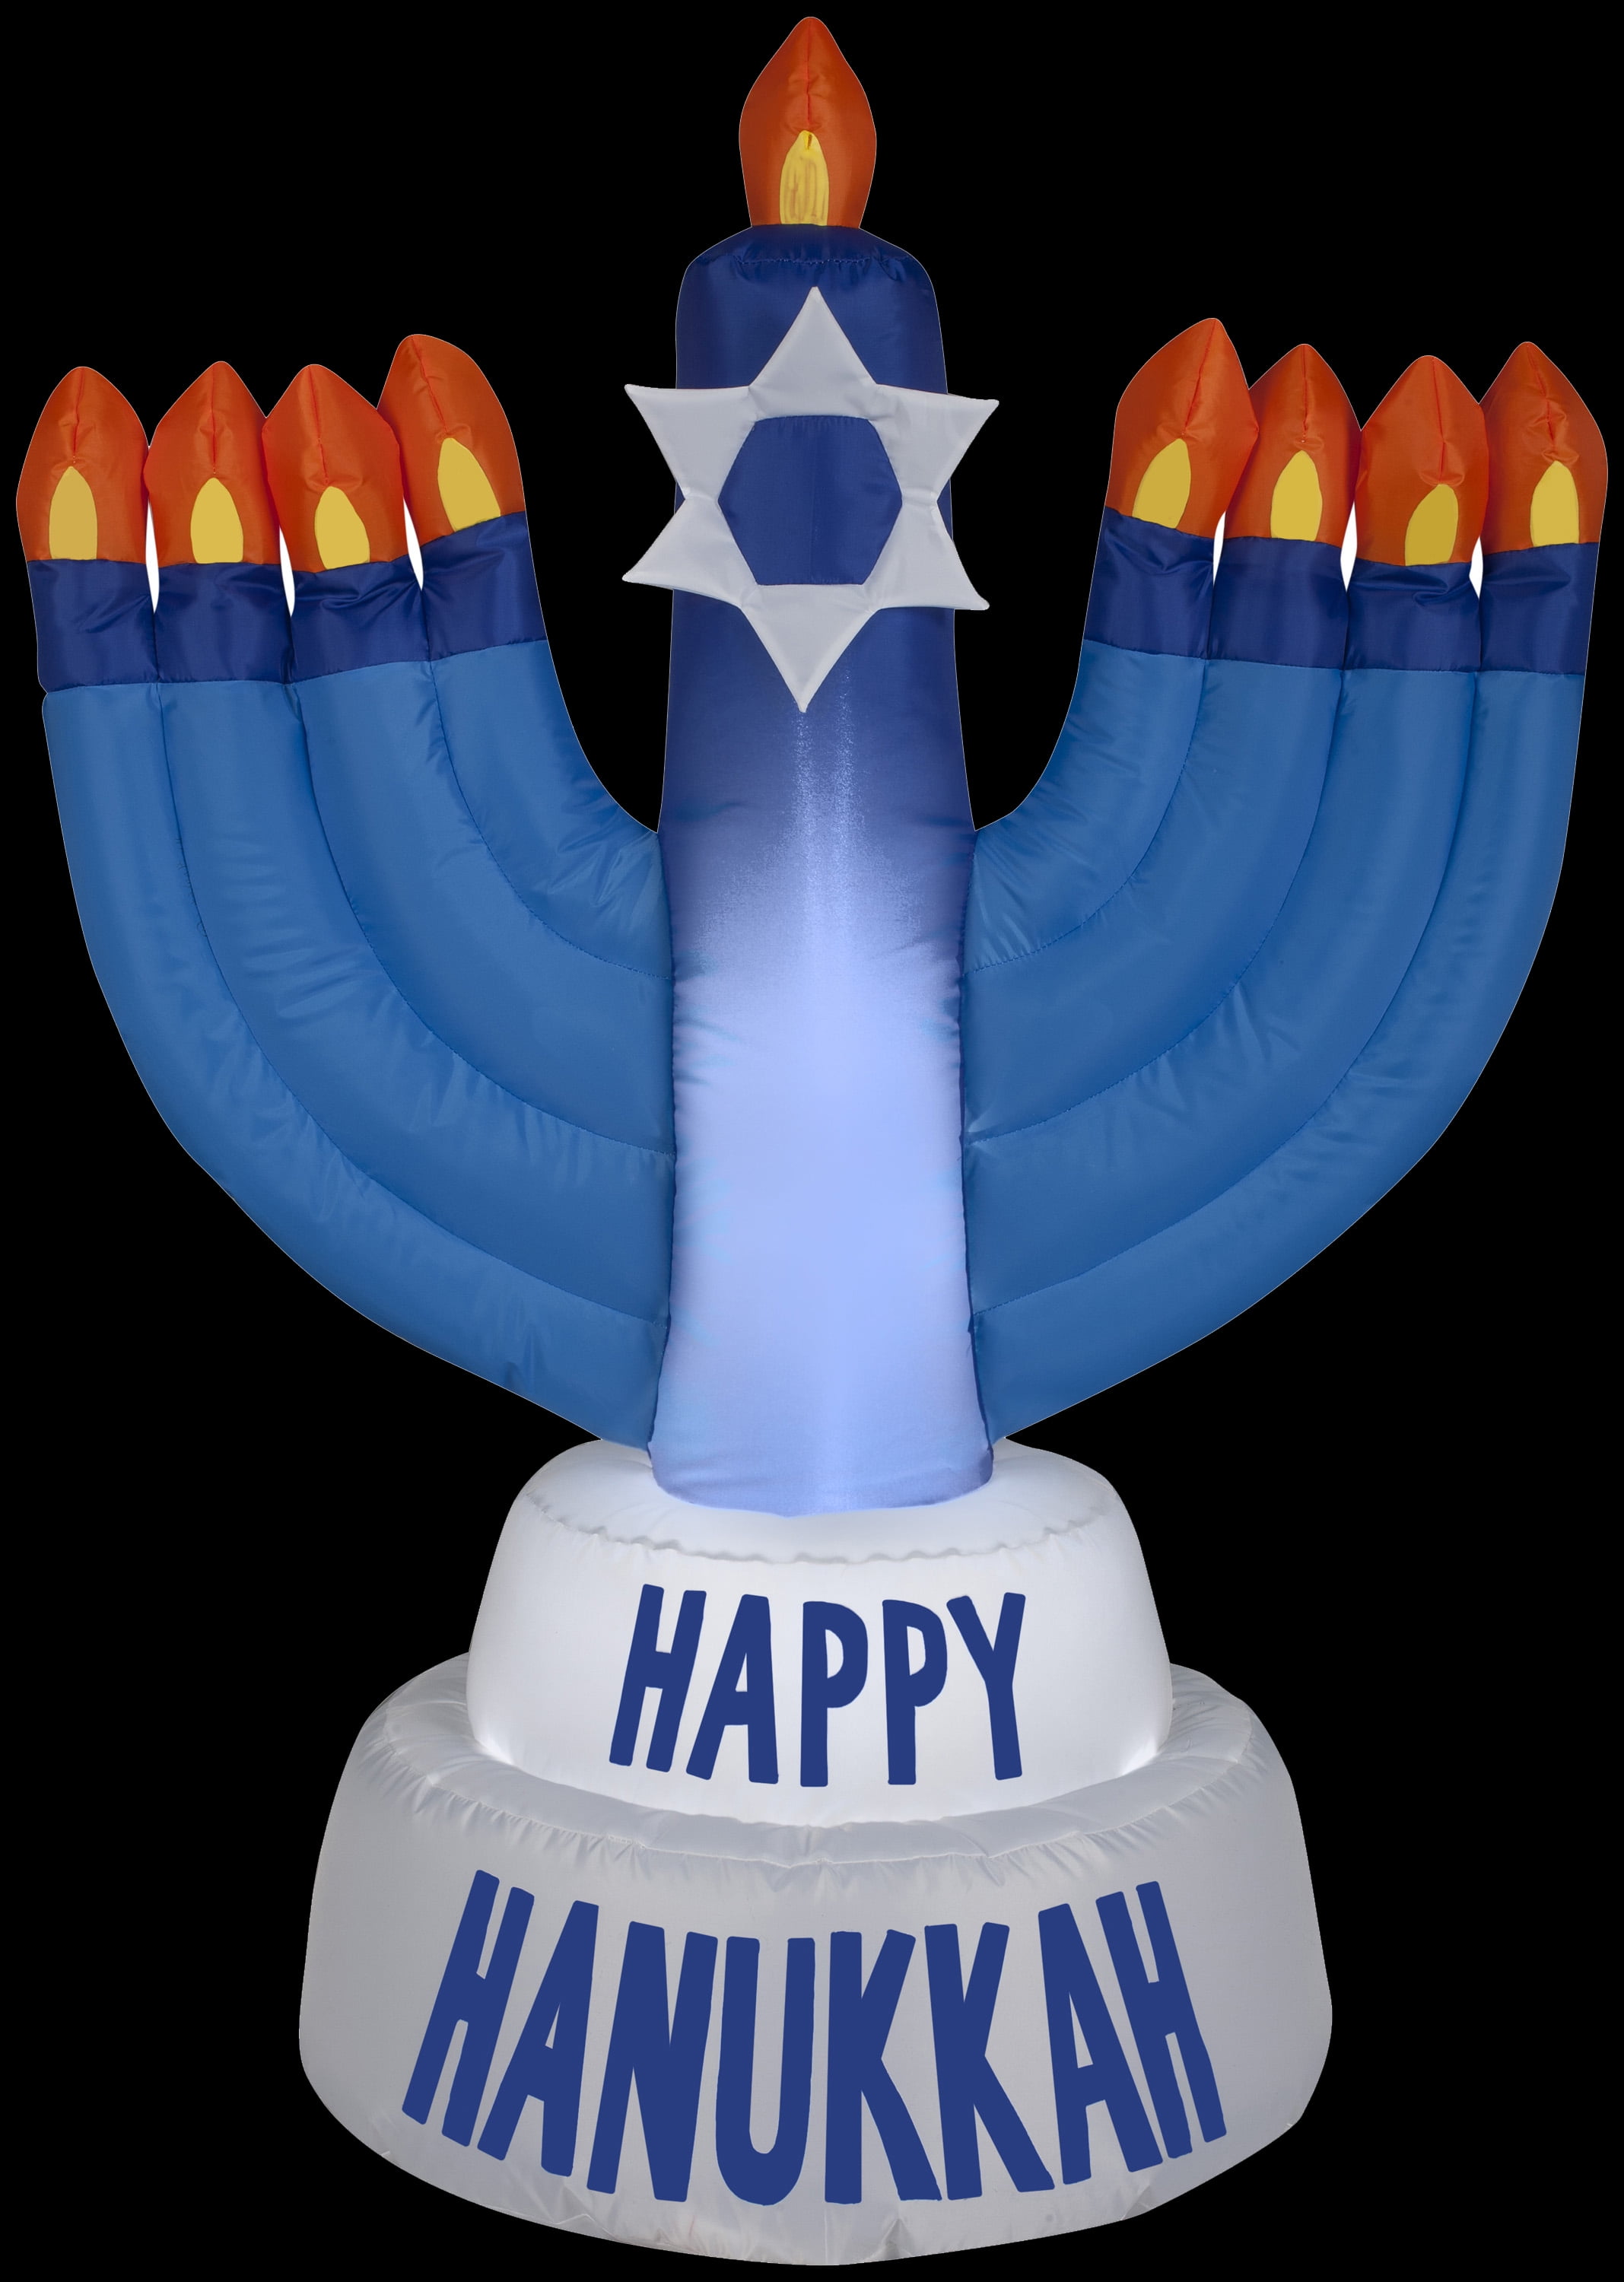 Hanukkah Candles Airblown Inflatables